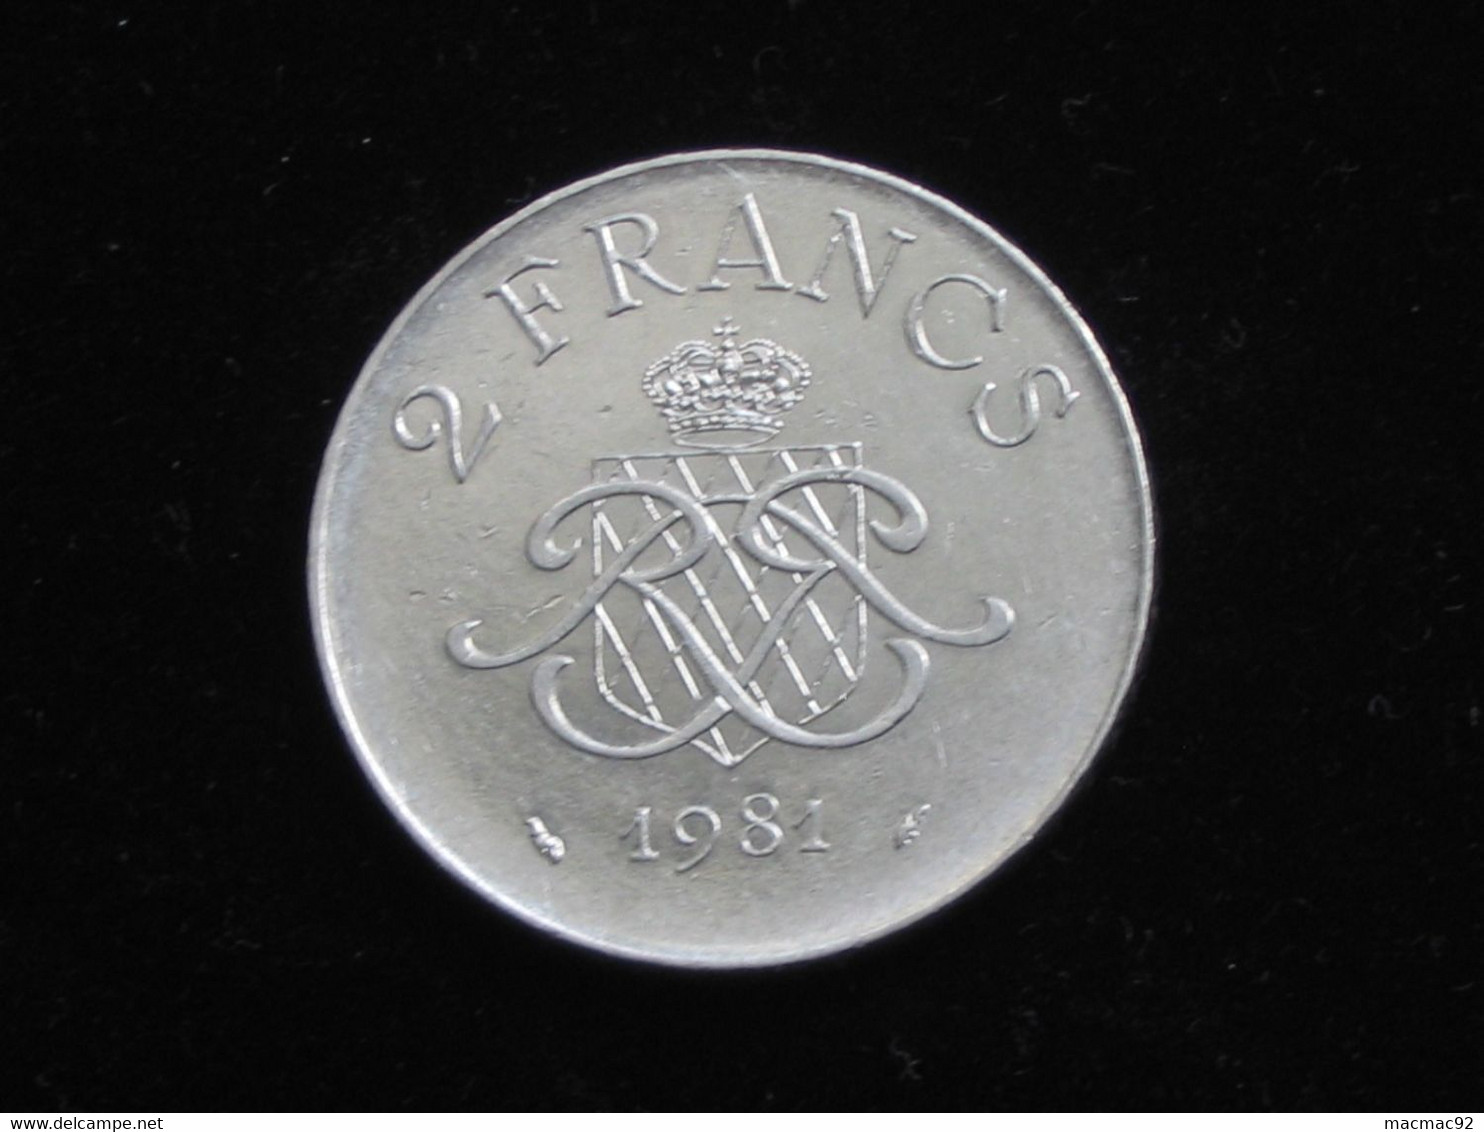 MONACO - 2 Francs 1981 - Rainier III Prince De Monaco **** EN ACHAT IMMEDIAT **** - 1949-1956 Old Francs